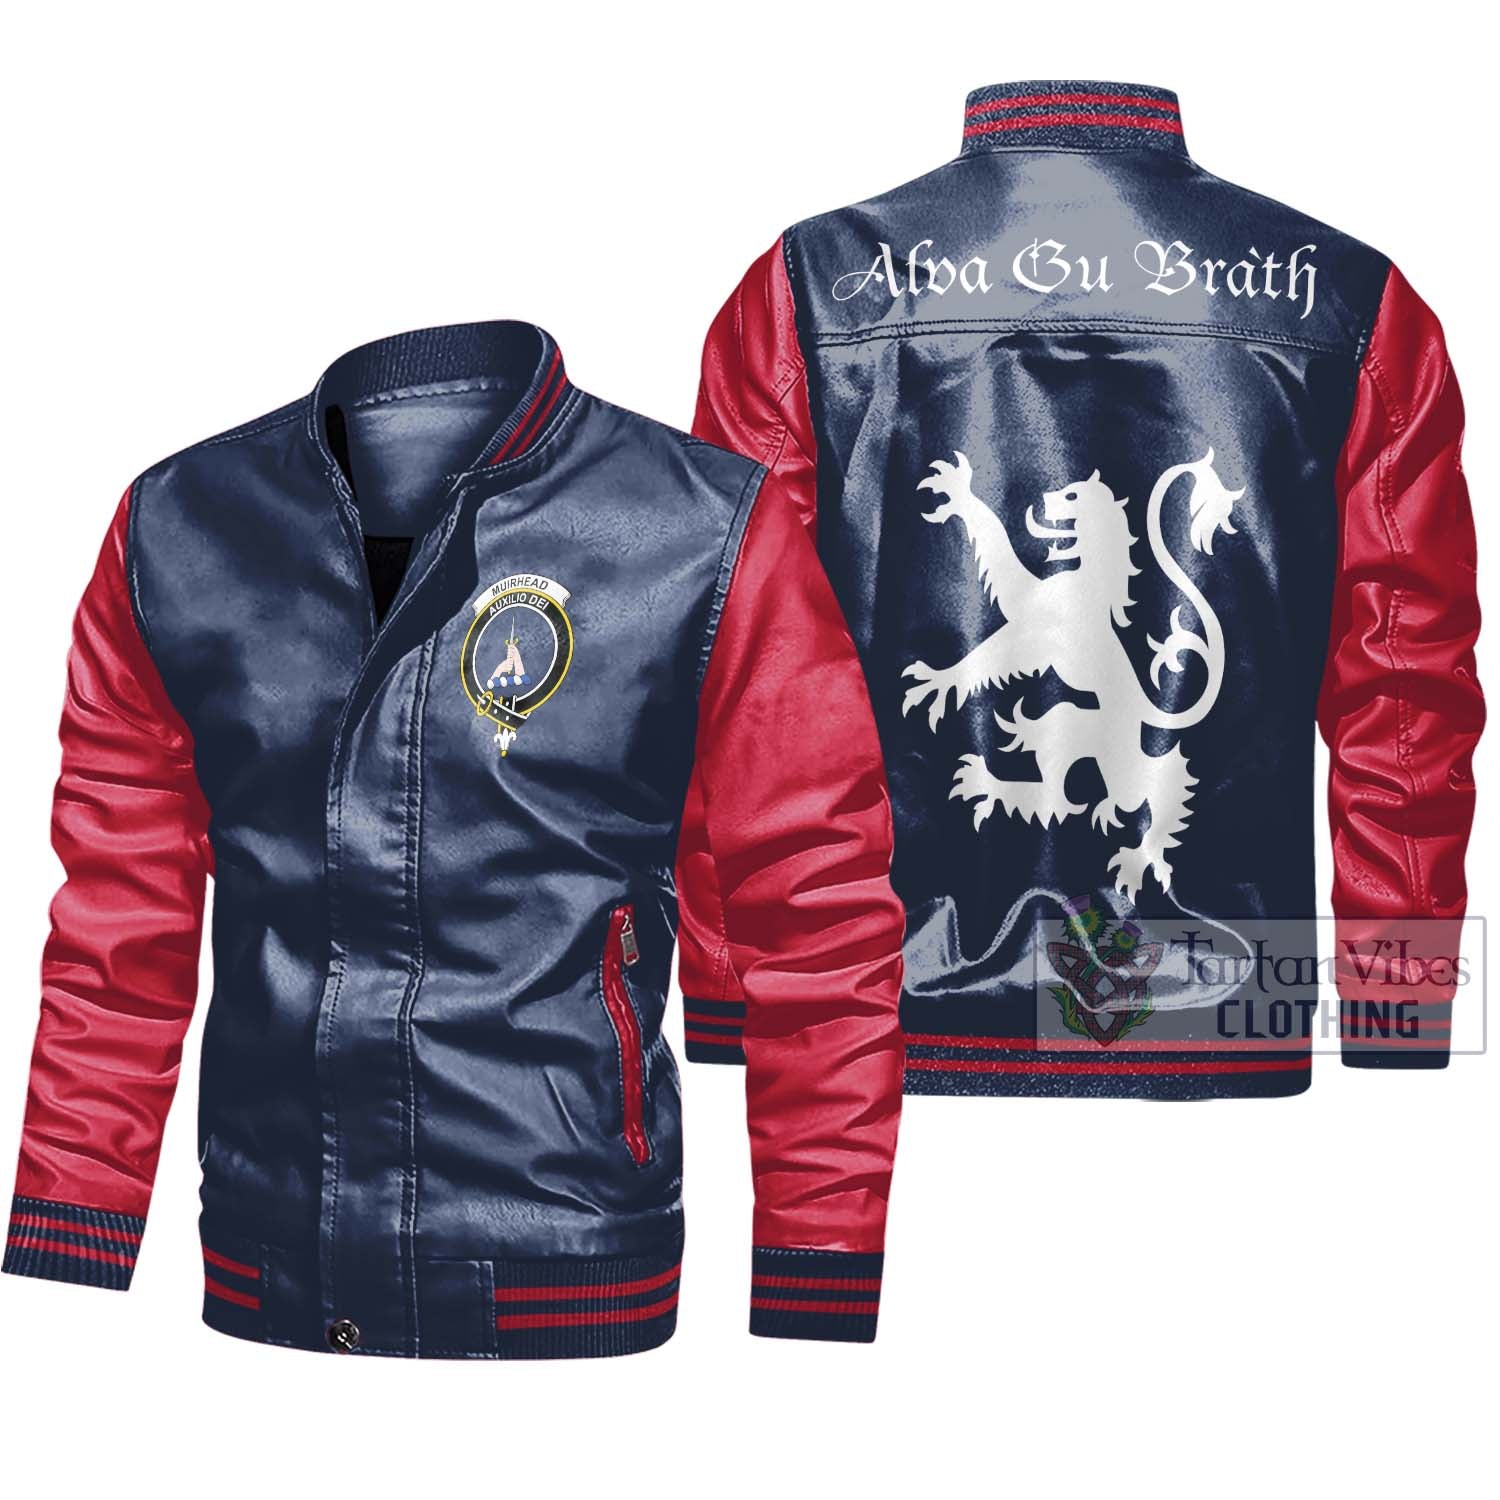 Tartan Vibes Clothing Muirhead Family Crest Leather Bomber Jacket Lion Rampant Alba Gu Brath Style